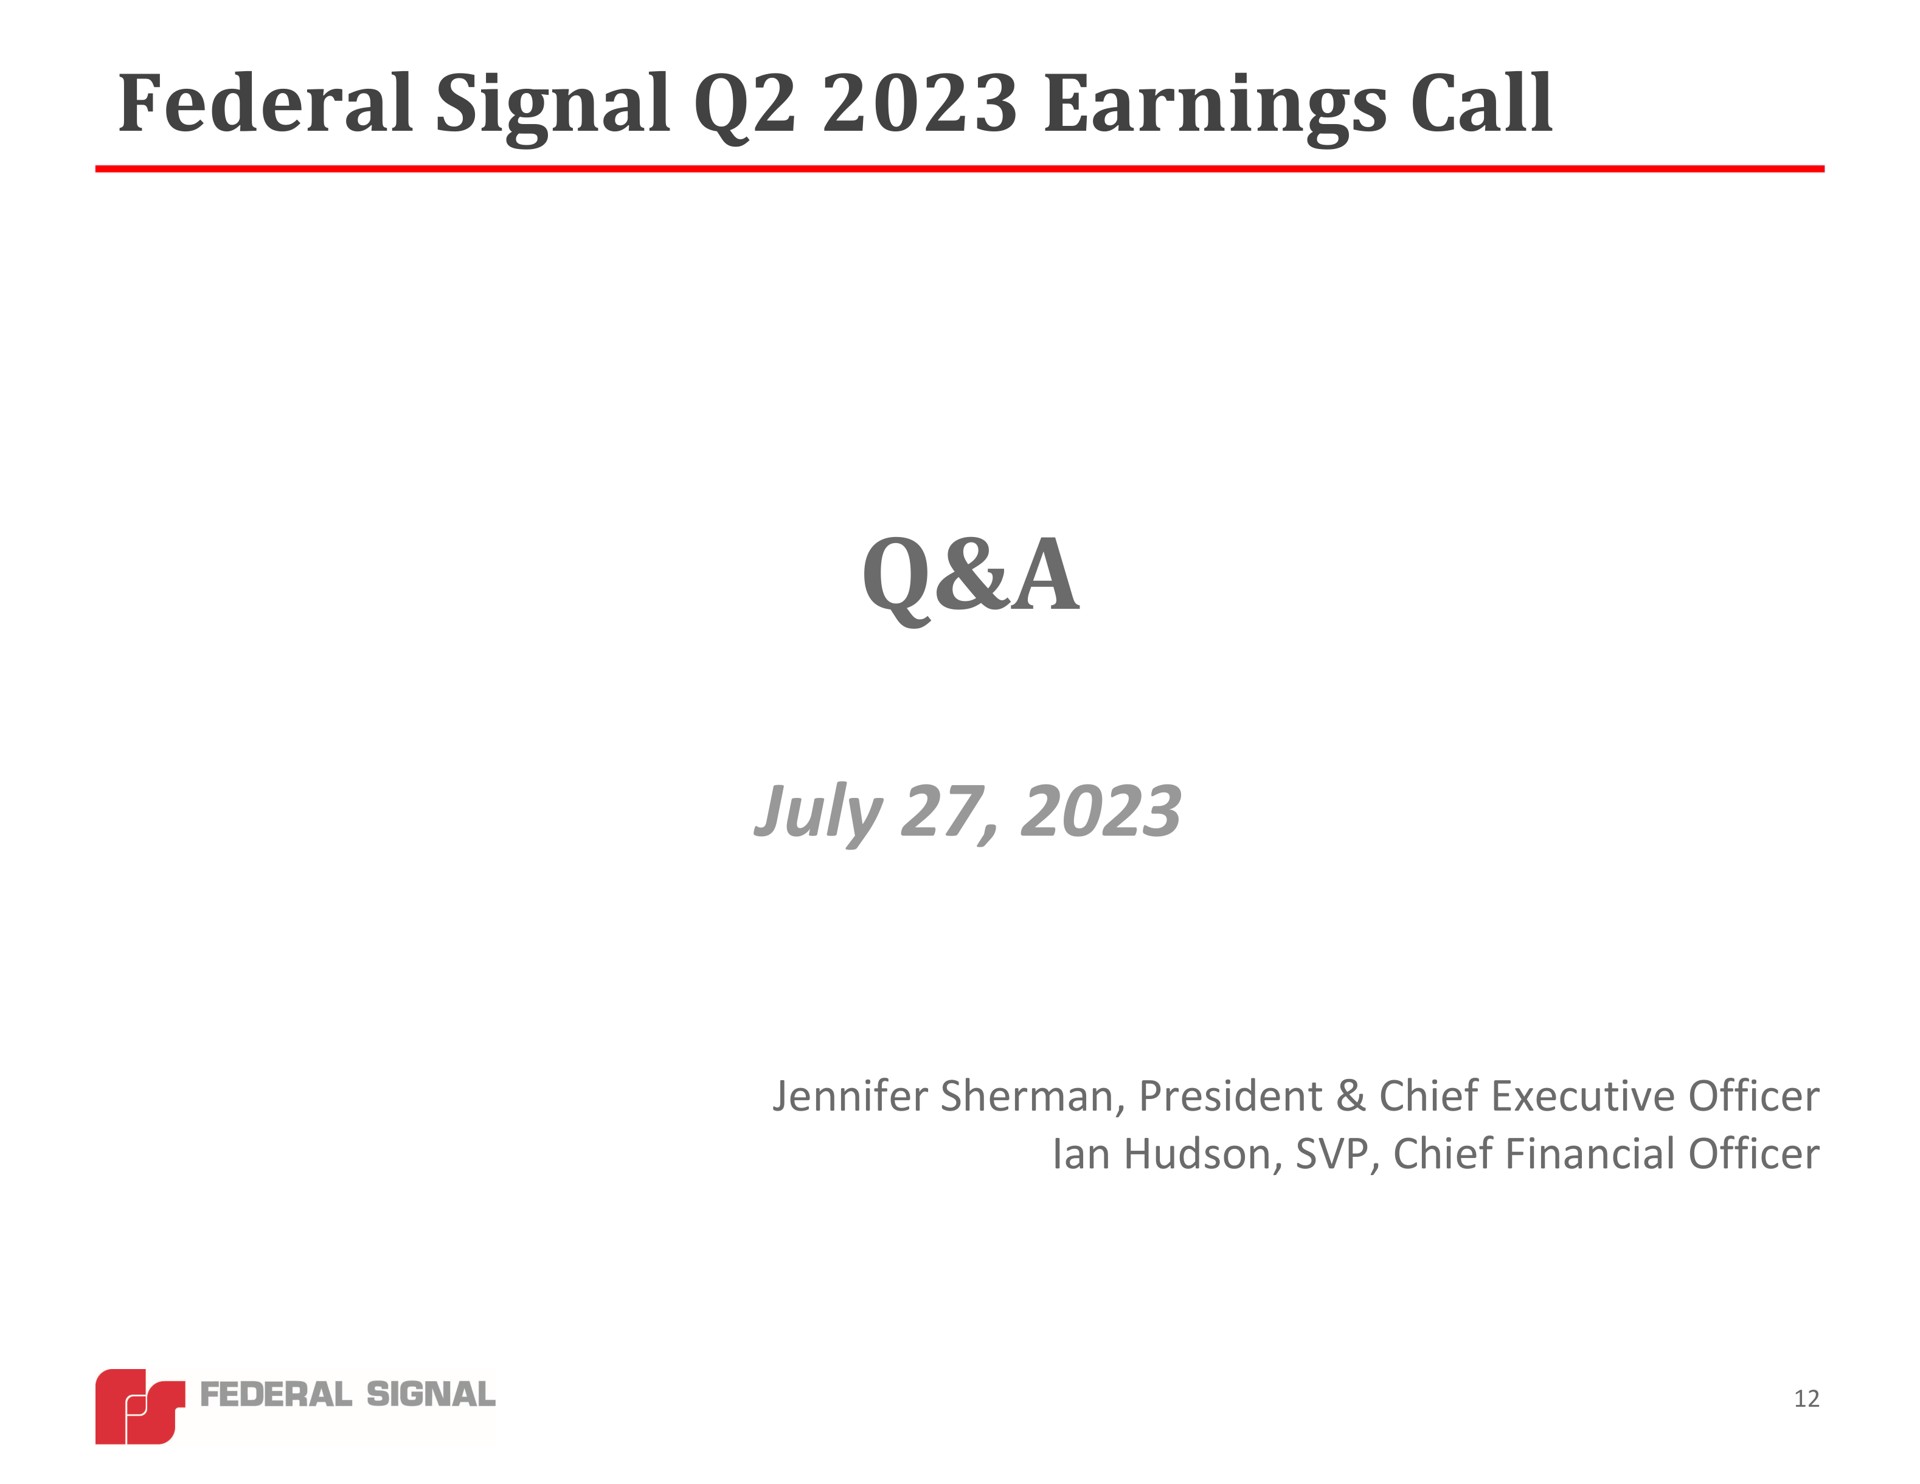 federal signal earnings call a | Federal Signal